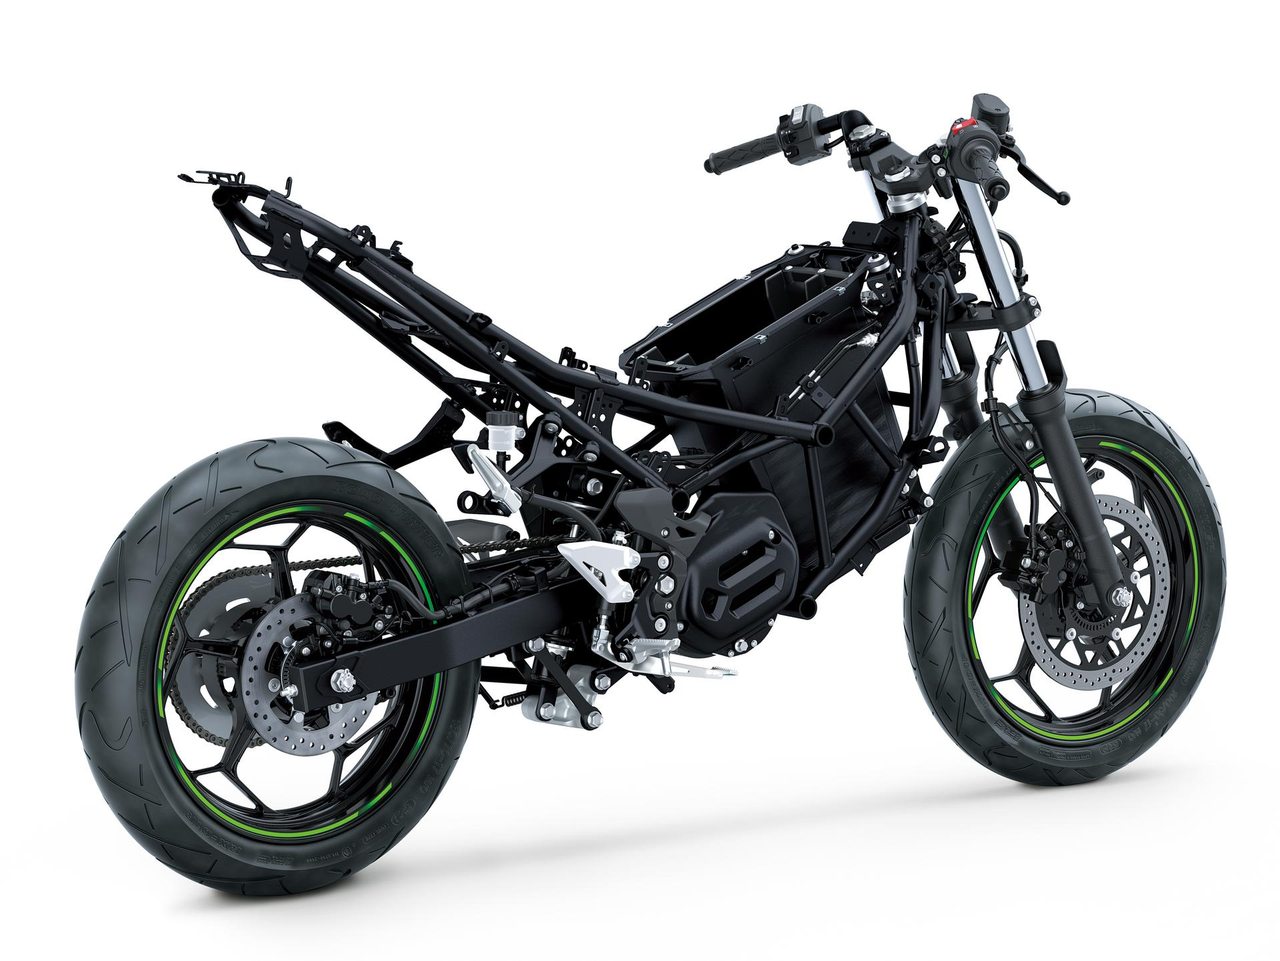 Solid Build: Kawasaki-Designed Motorcycle Chassis